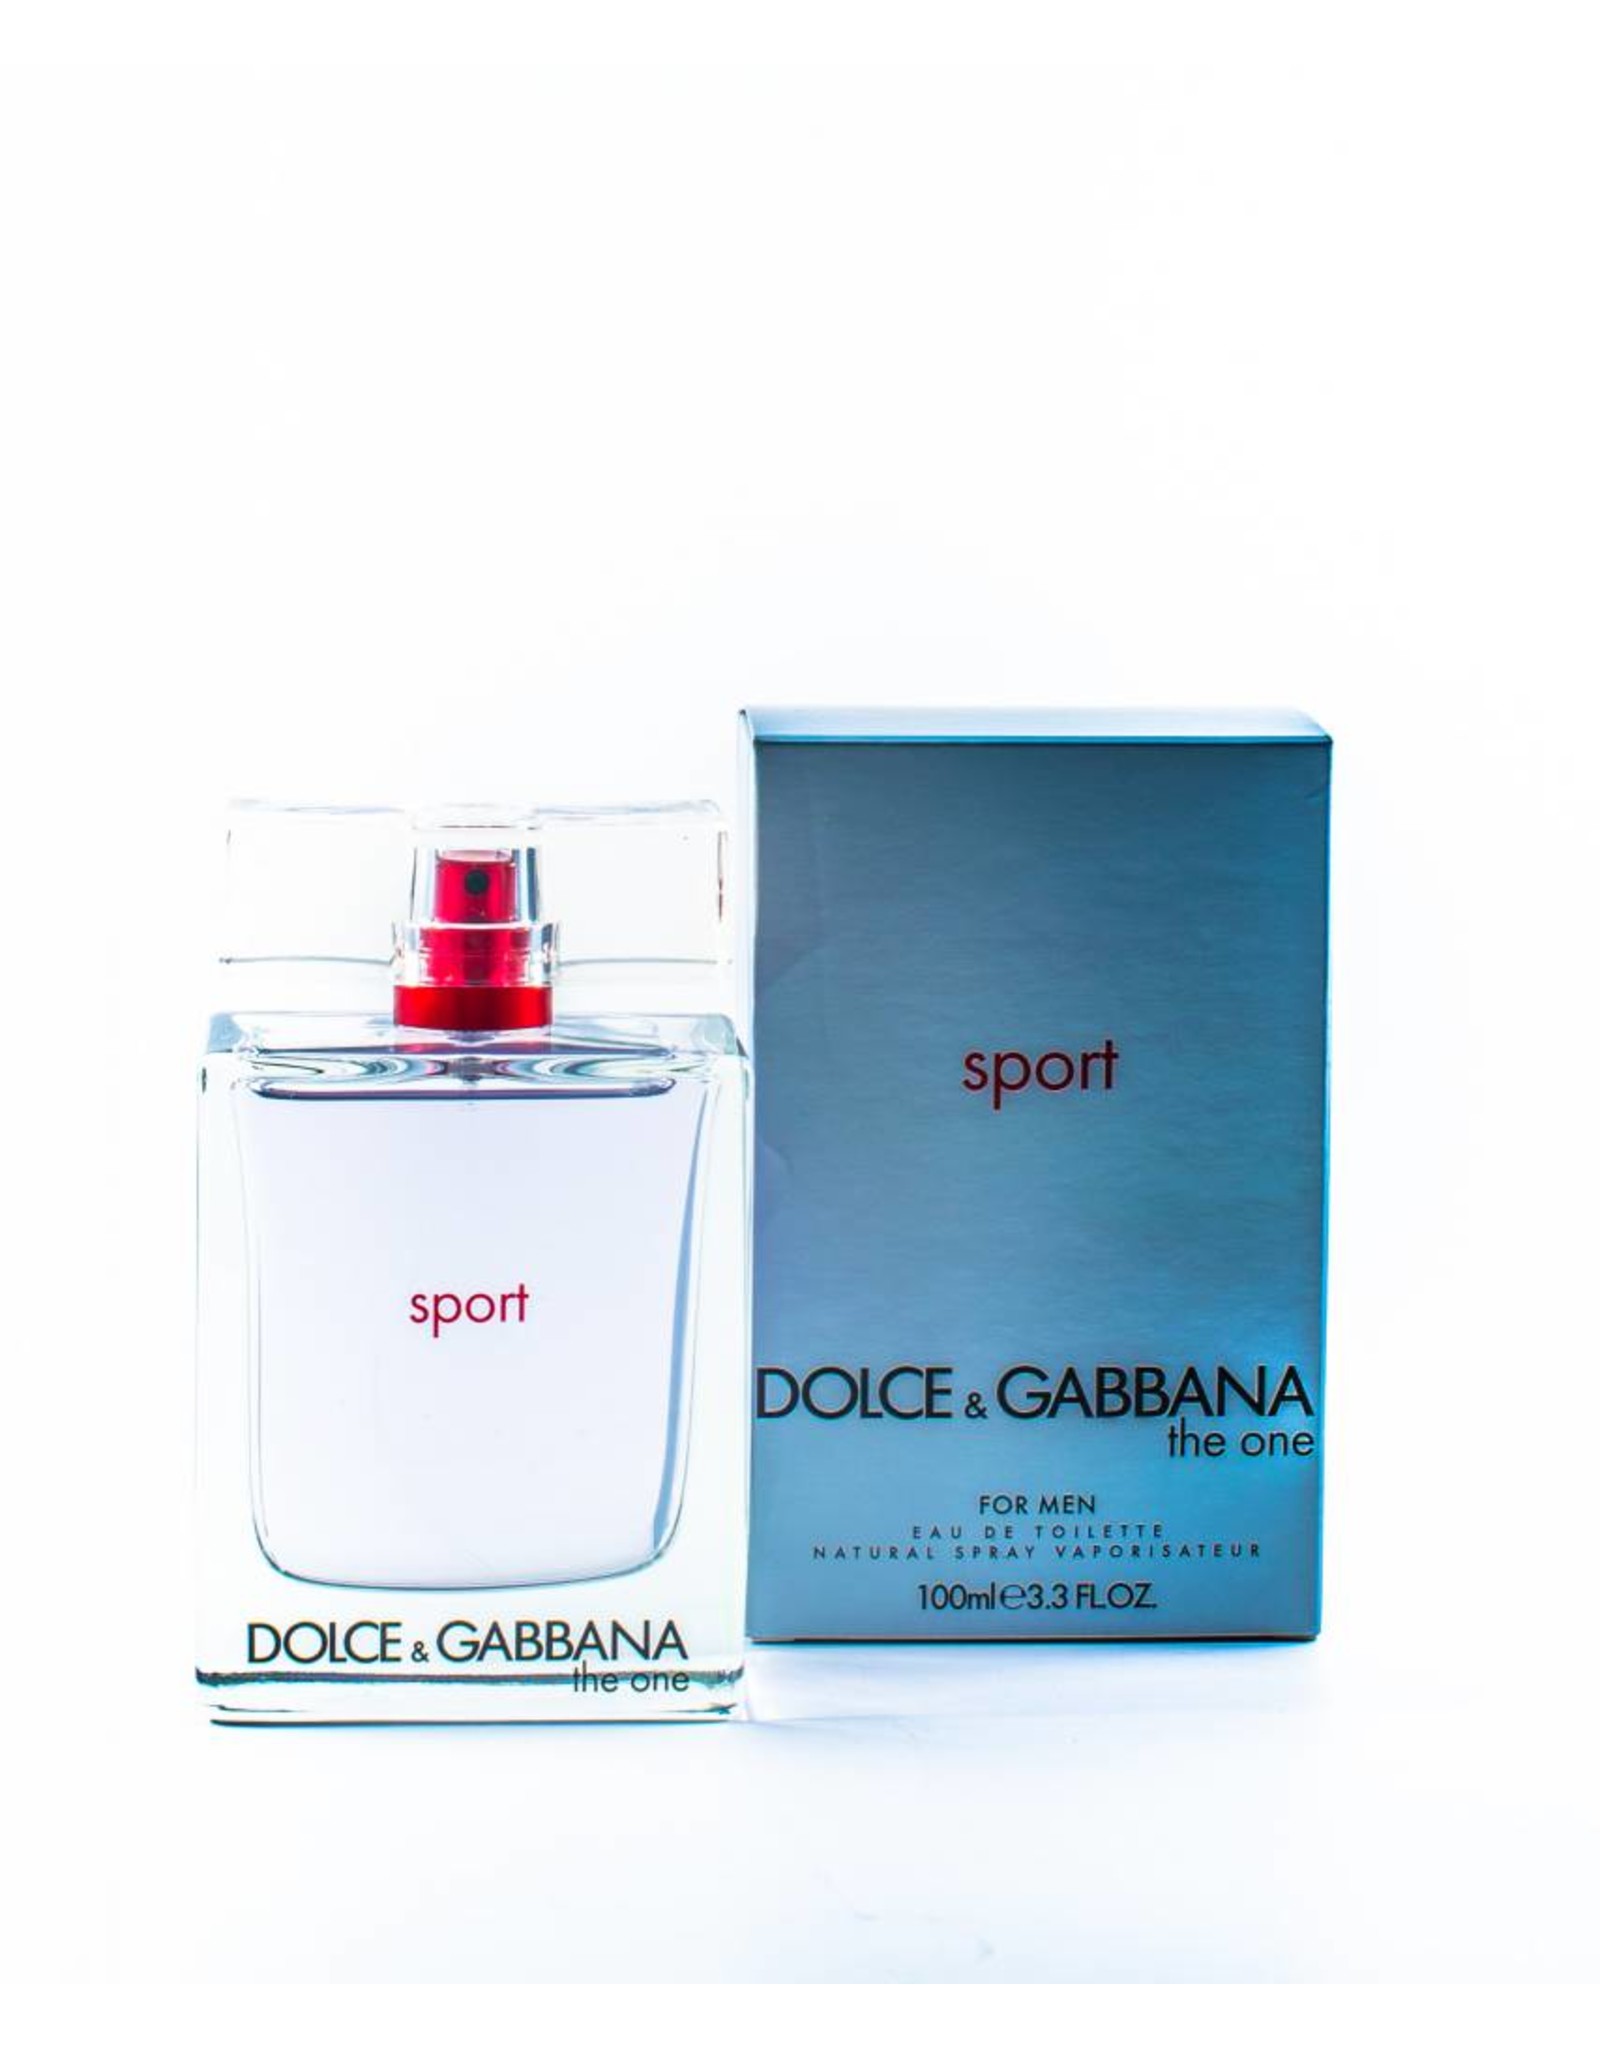 dolce gabbana perfume sport